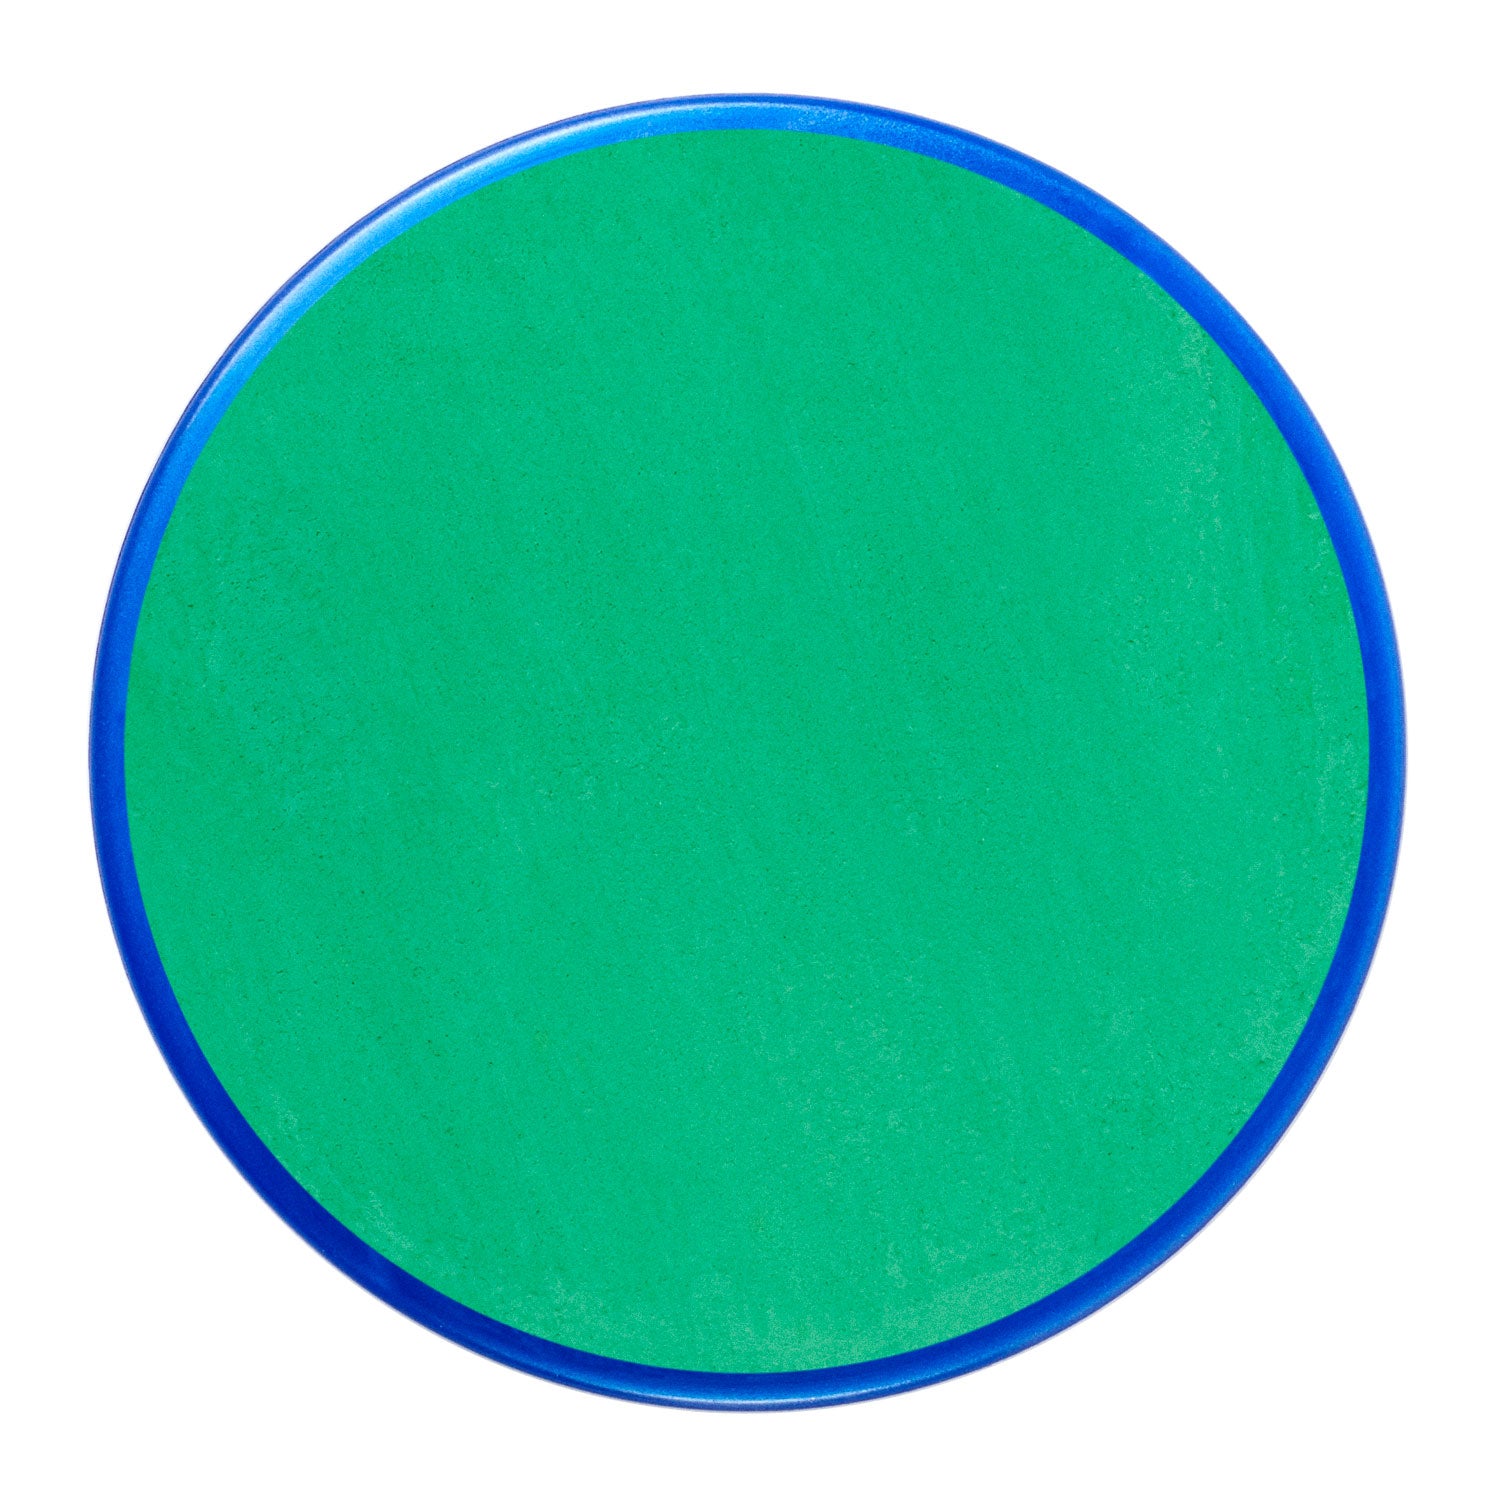 Snazaroo Face Paint - Bright Green